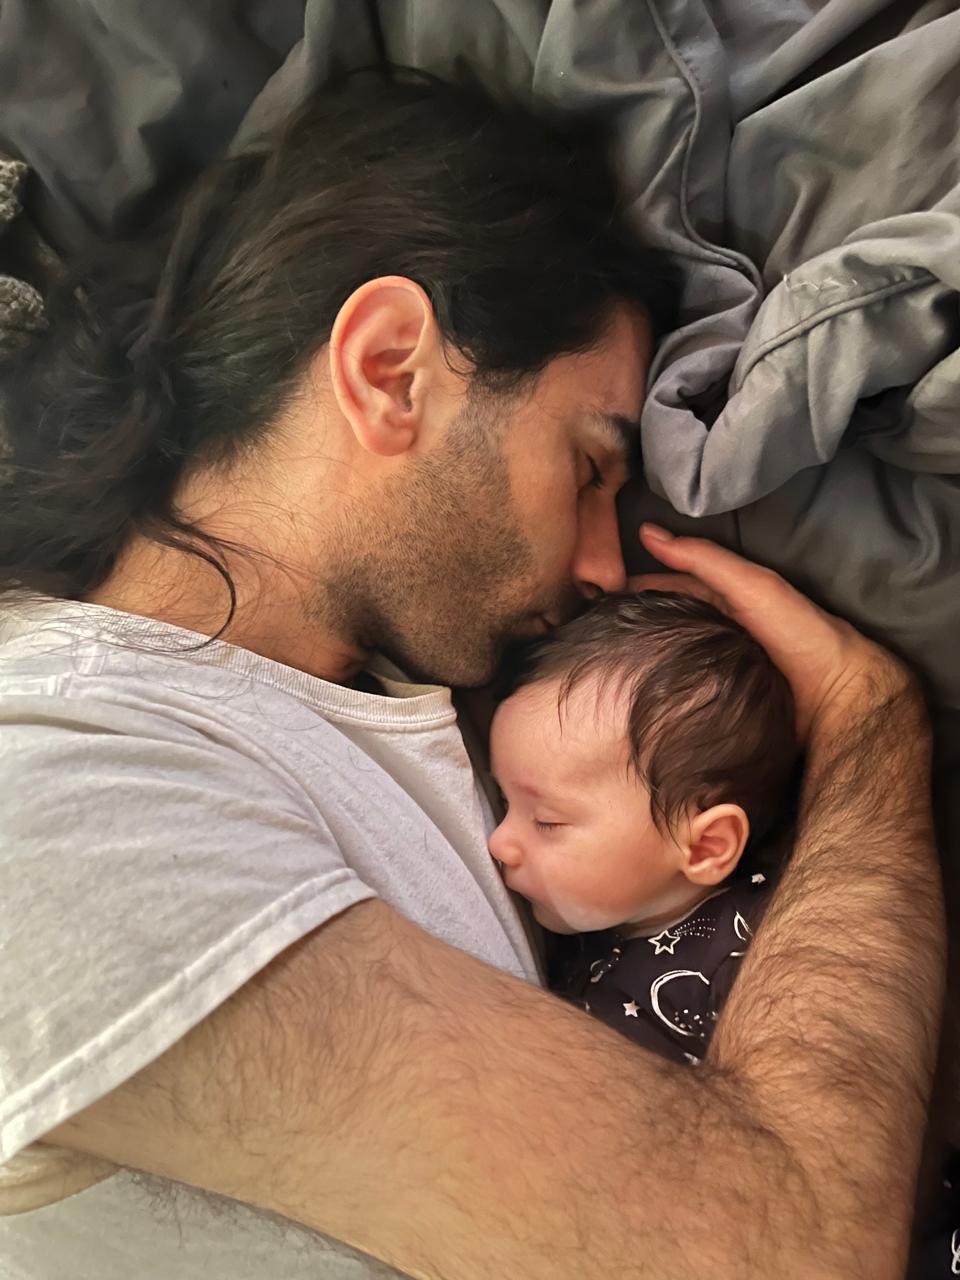 Avtandil Tsereteli takes pleasure in being an active caregiver for his newborn son. Photo courtesy of Avtandil Tsereteli.